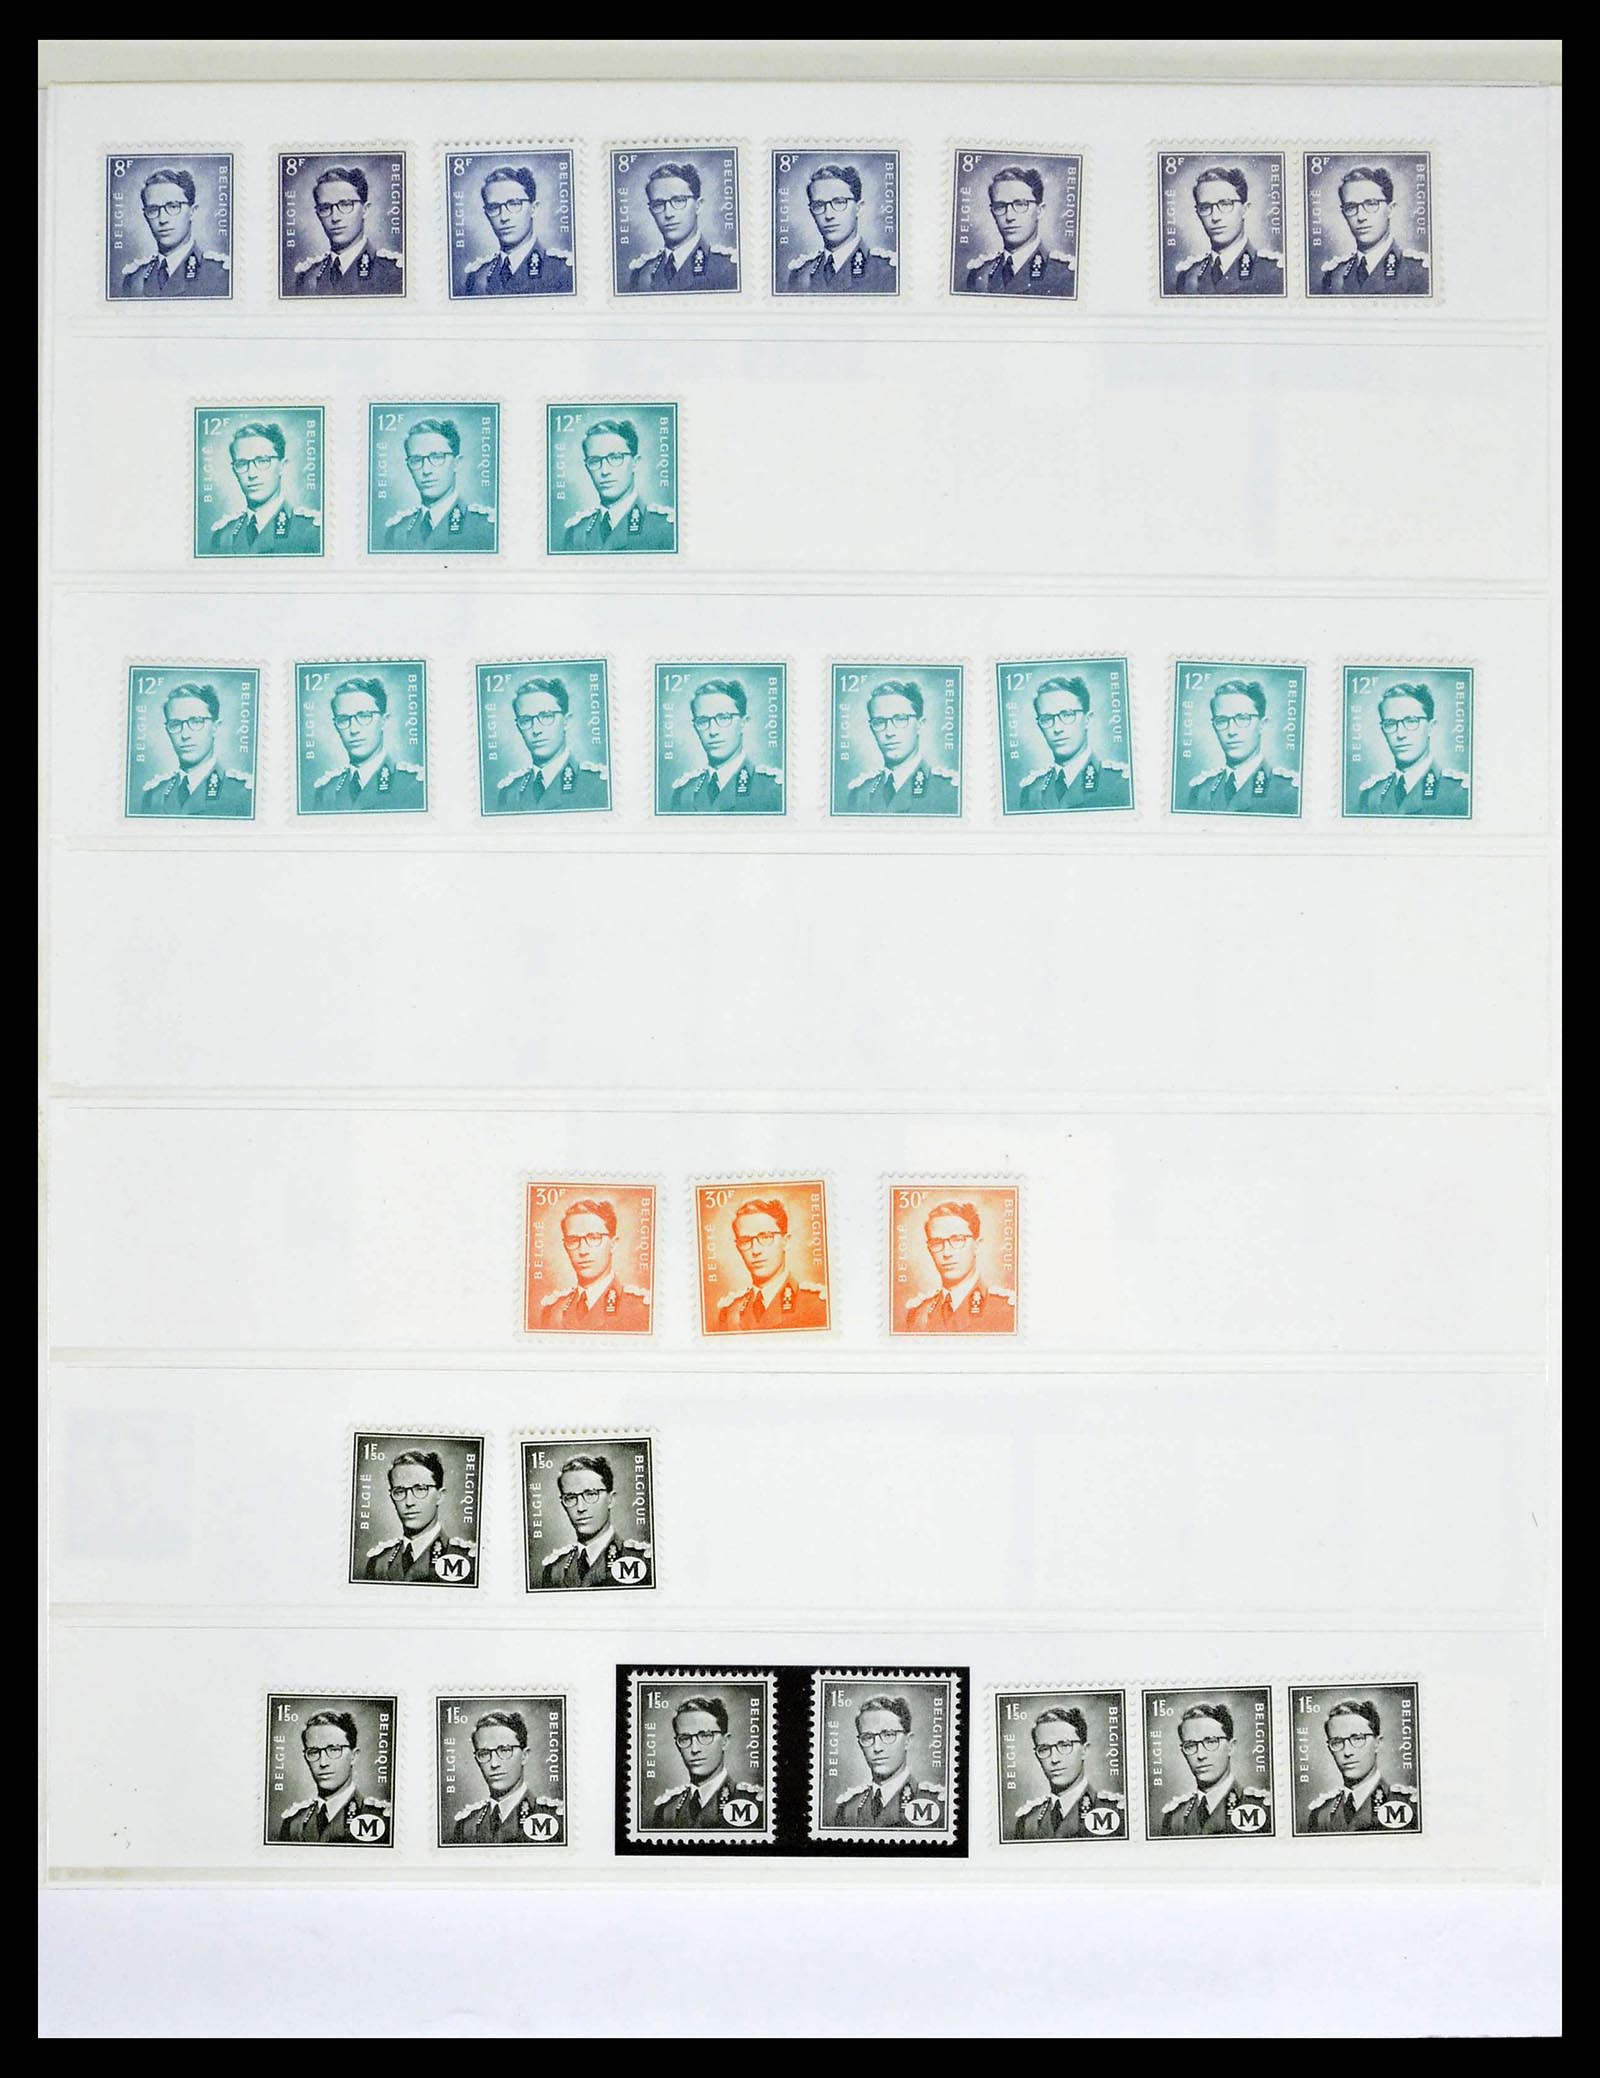 39229 0026 - Stamp collection 39229 Belgium Boudewijn with glasses 1952-1975.